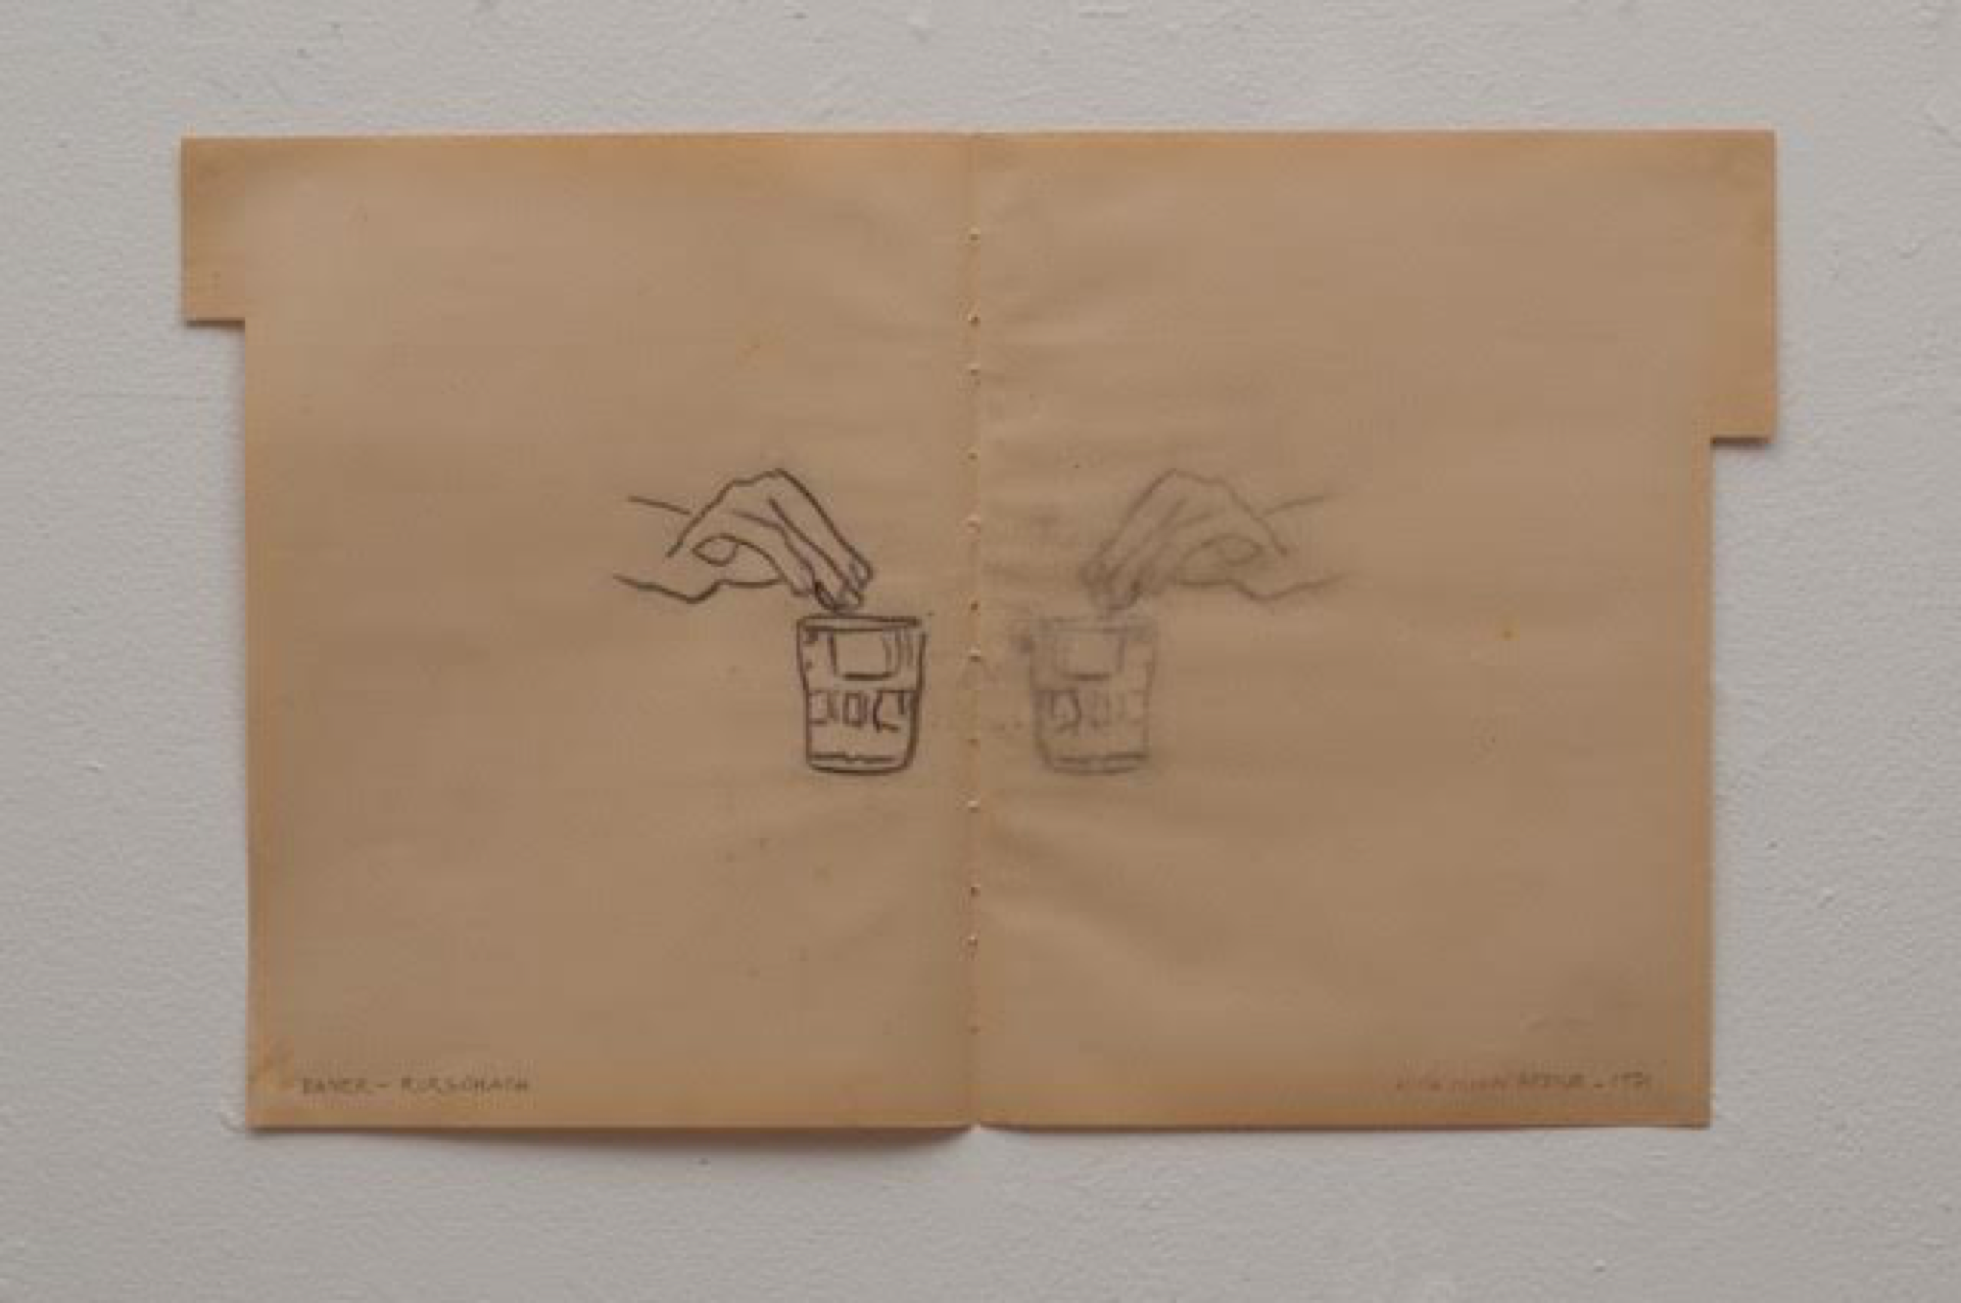 Alicia Mihai Gazcue - Bayer-rorschach. 1971. Carboncillo sobre páginas de un libro de copiar cartas de la compañía Bayer. 27,94 x 22,86 cm.